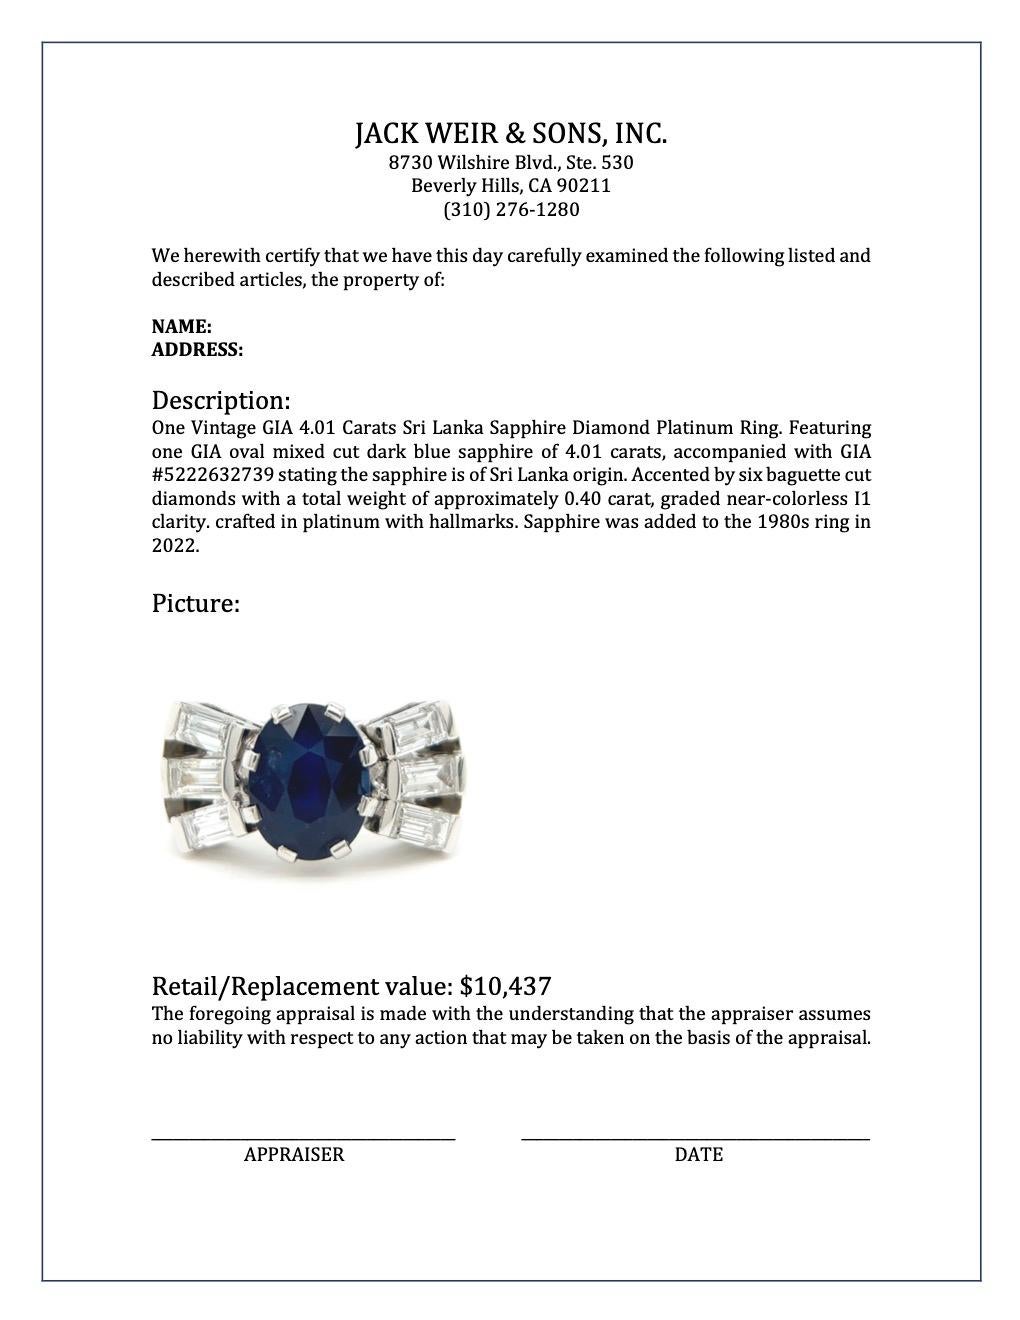 Vintage GIA 4.01 Carats Sri Lanka Sapphire Diamond Platinum Ring 3